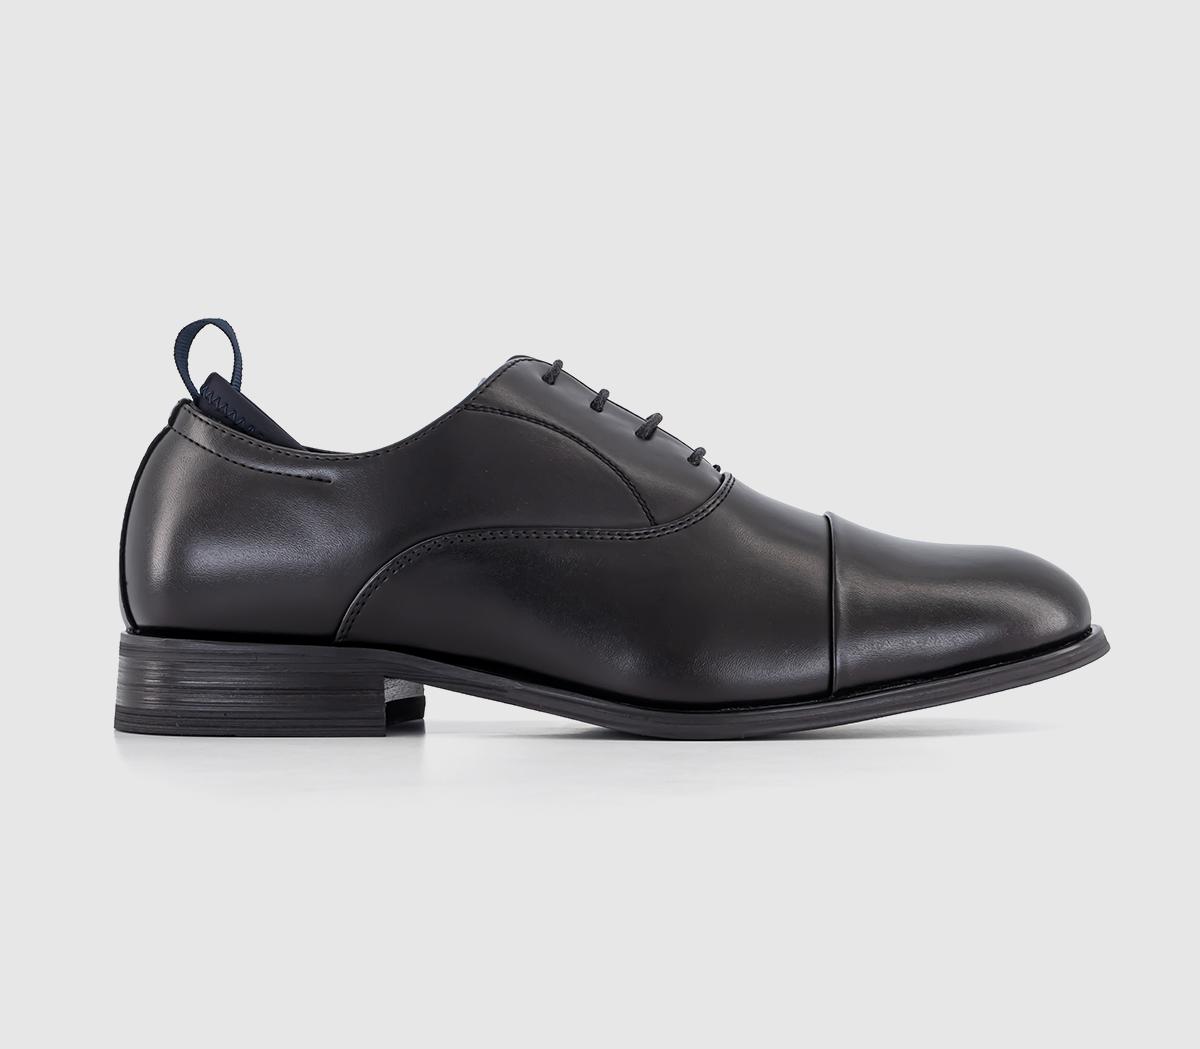 OFFICEMason Neoprene Detail Comfort Oxford ShoesBlack